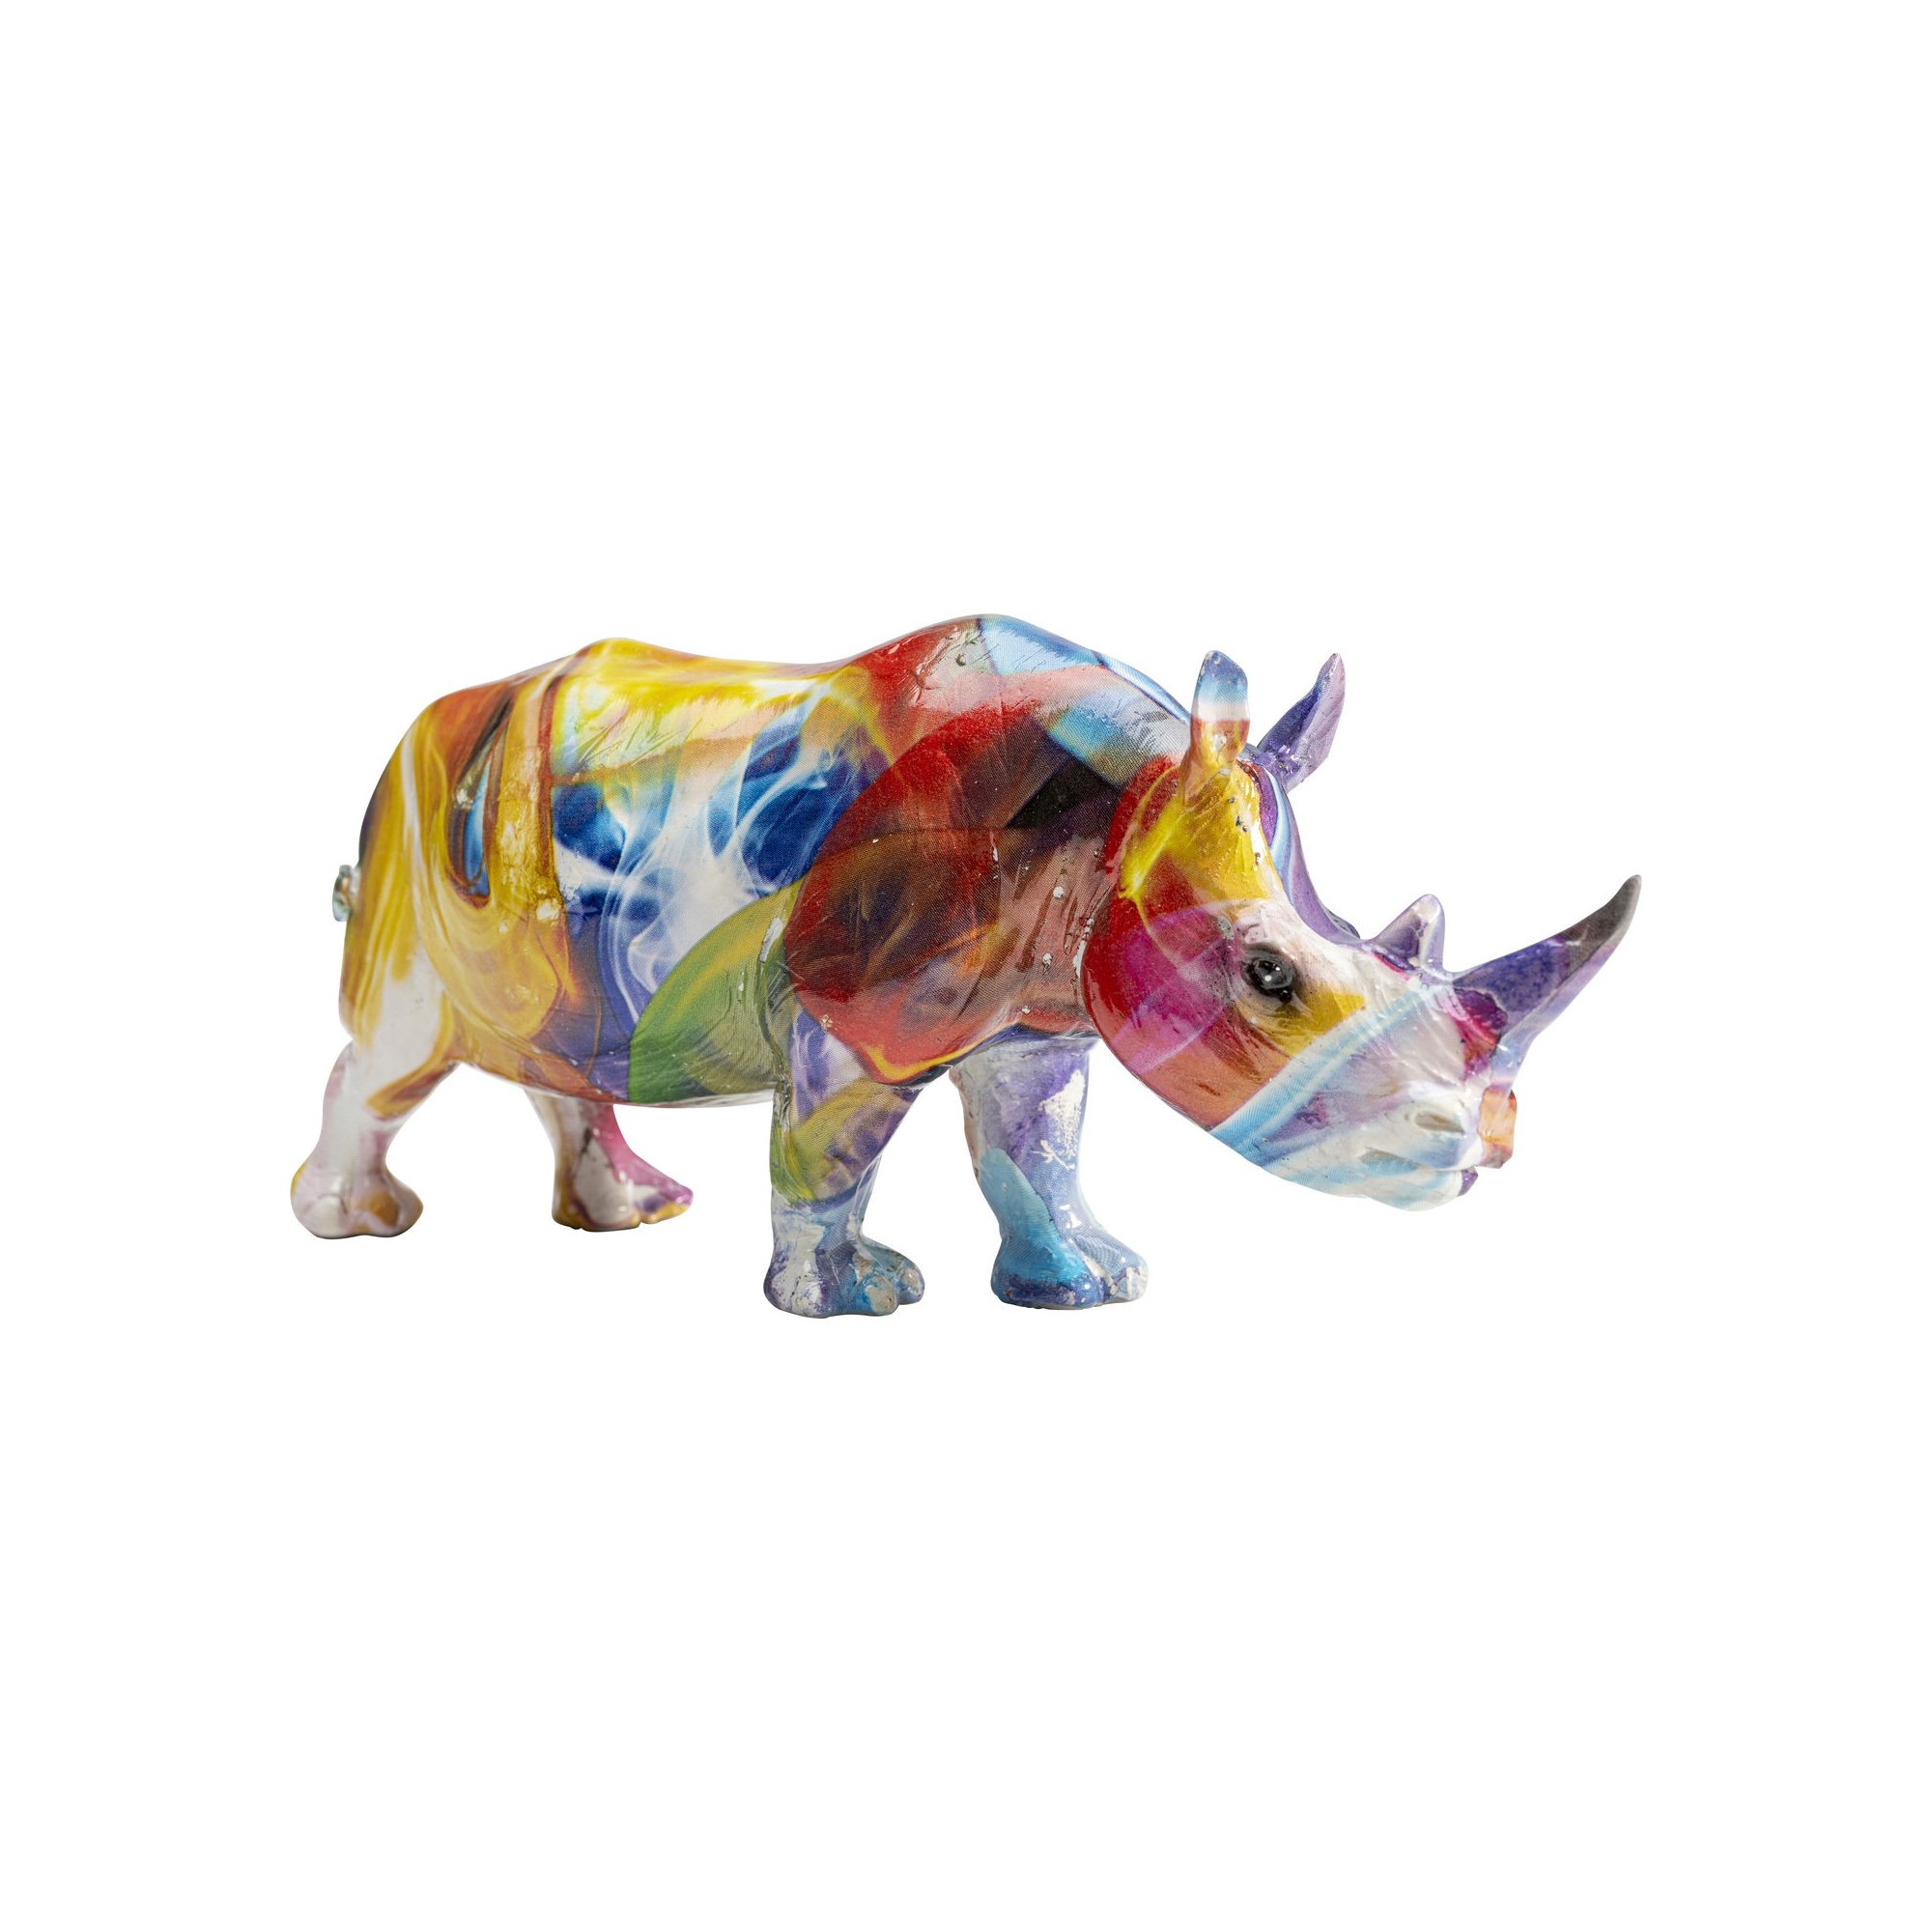 Déco Rhino halo de couleurs Kare Design